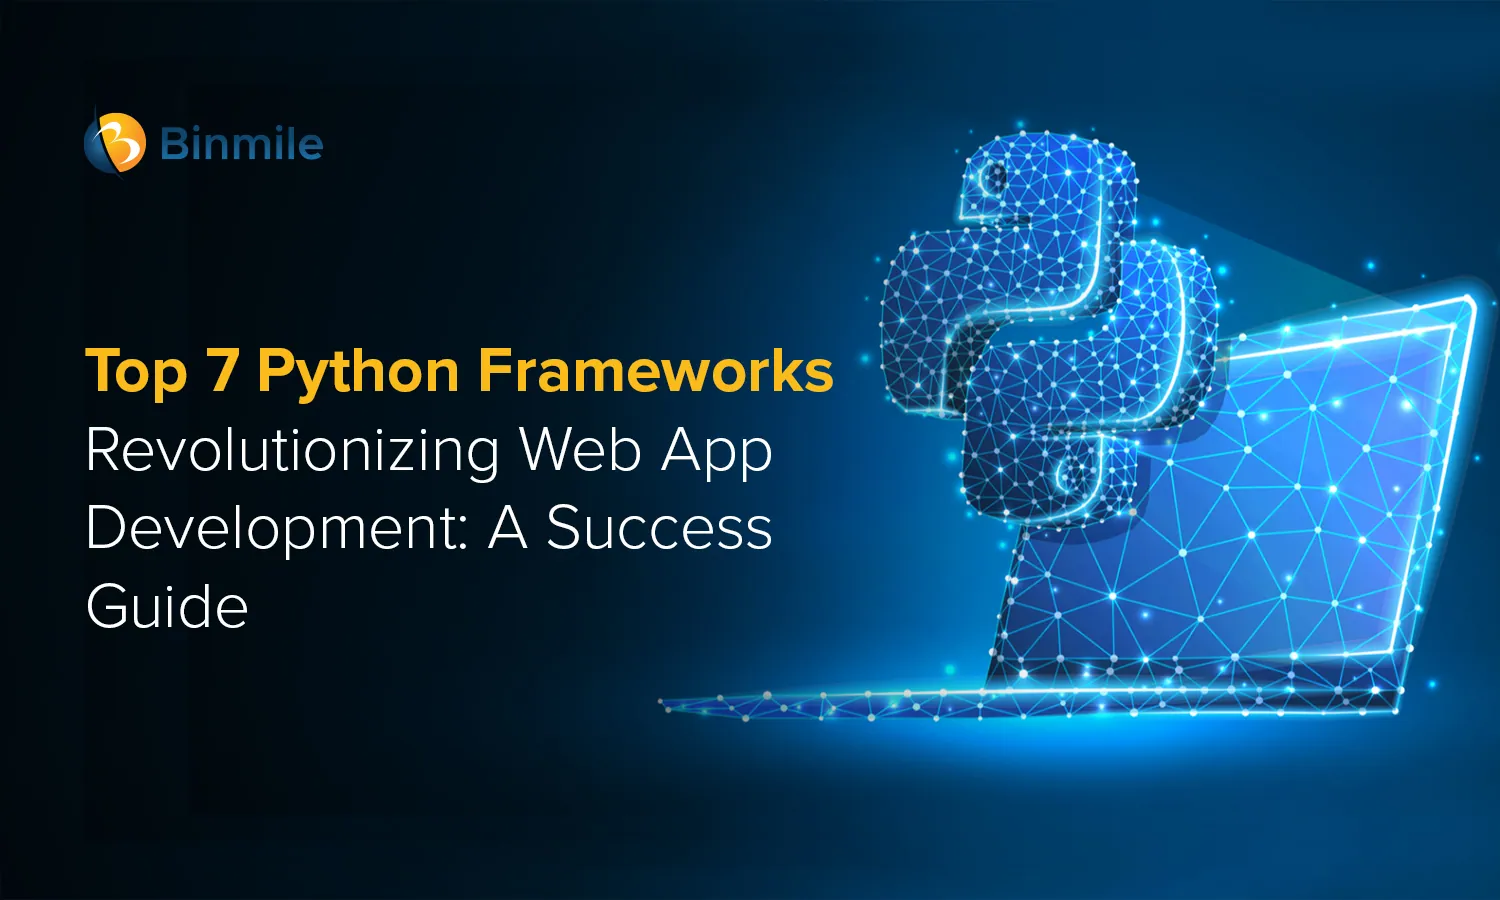 Top 7 Python Frameworks Revolutionizing Web App Development | Binmile